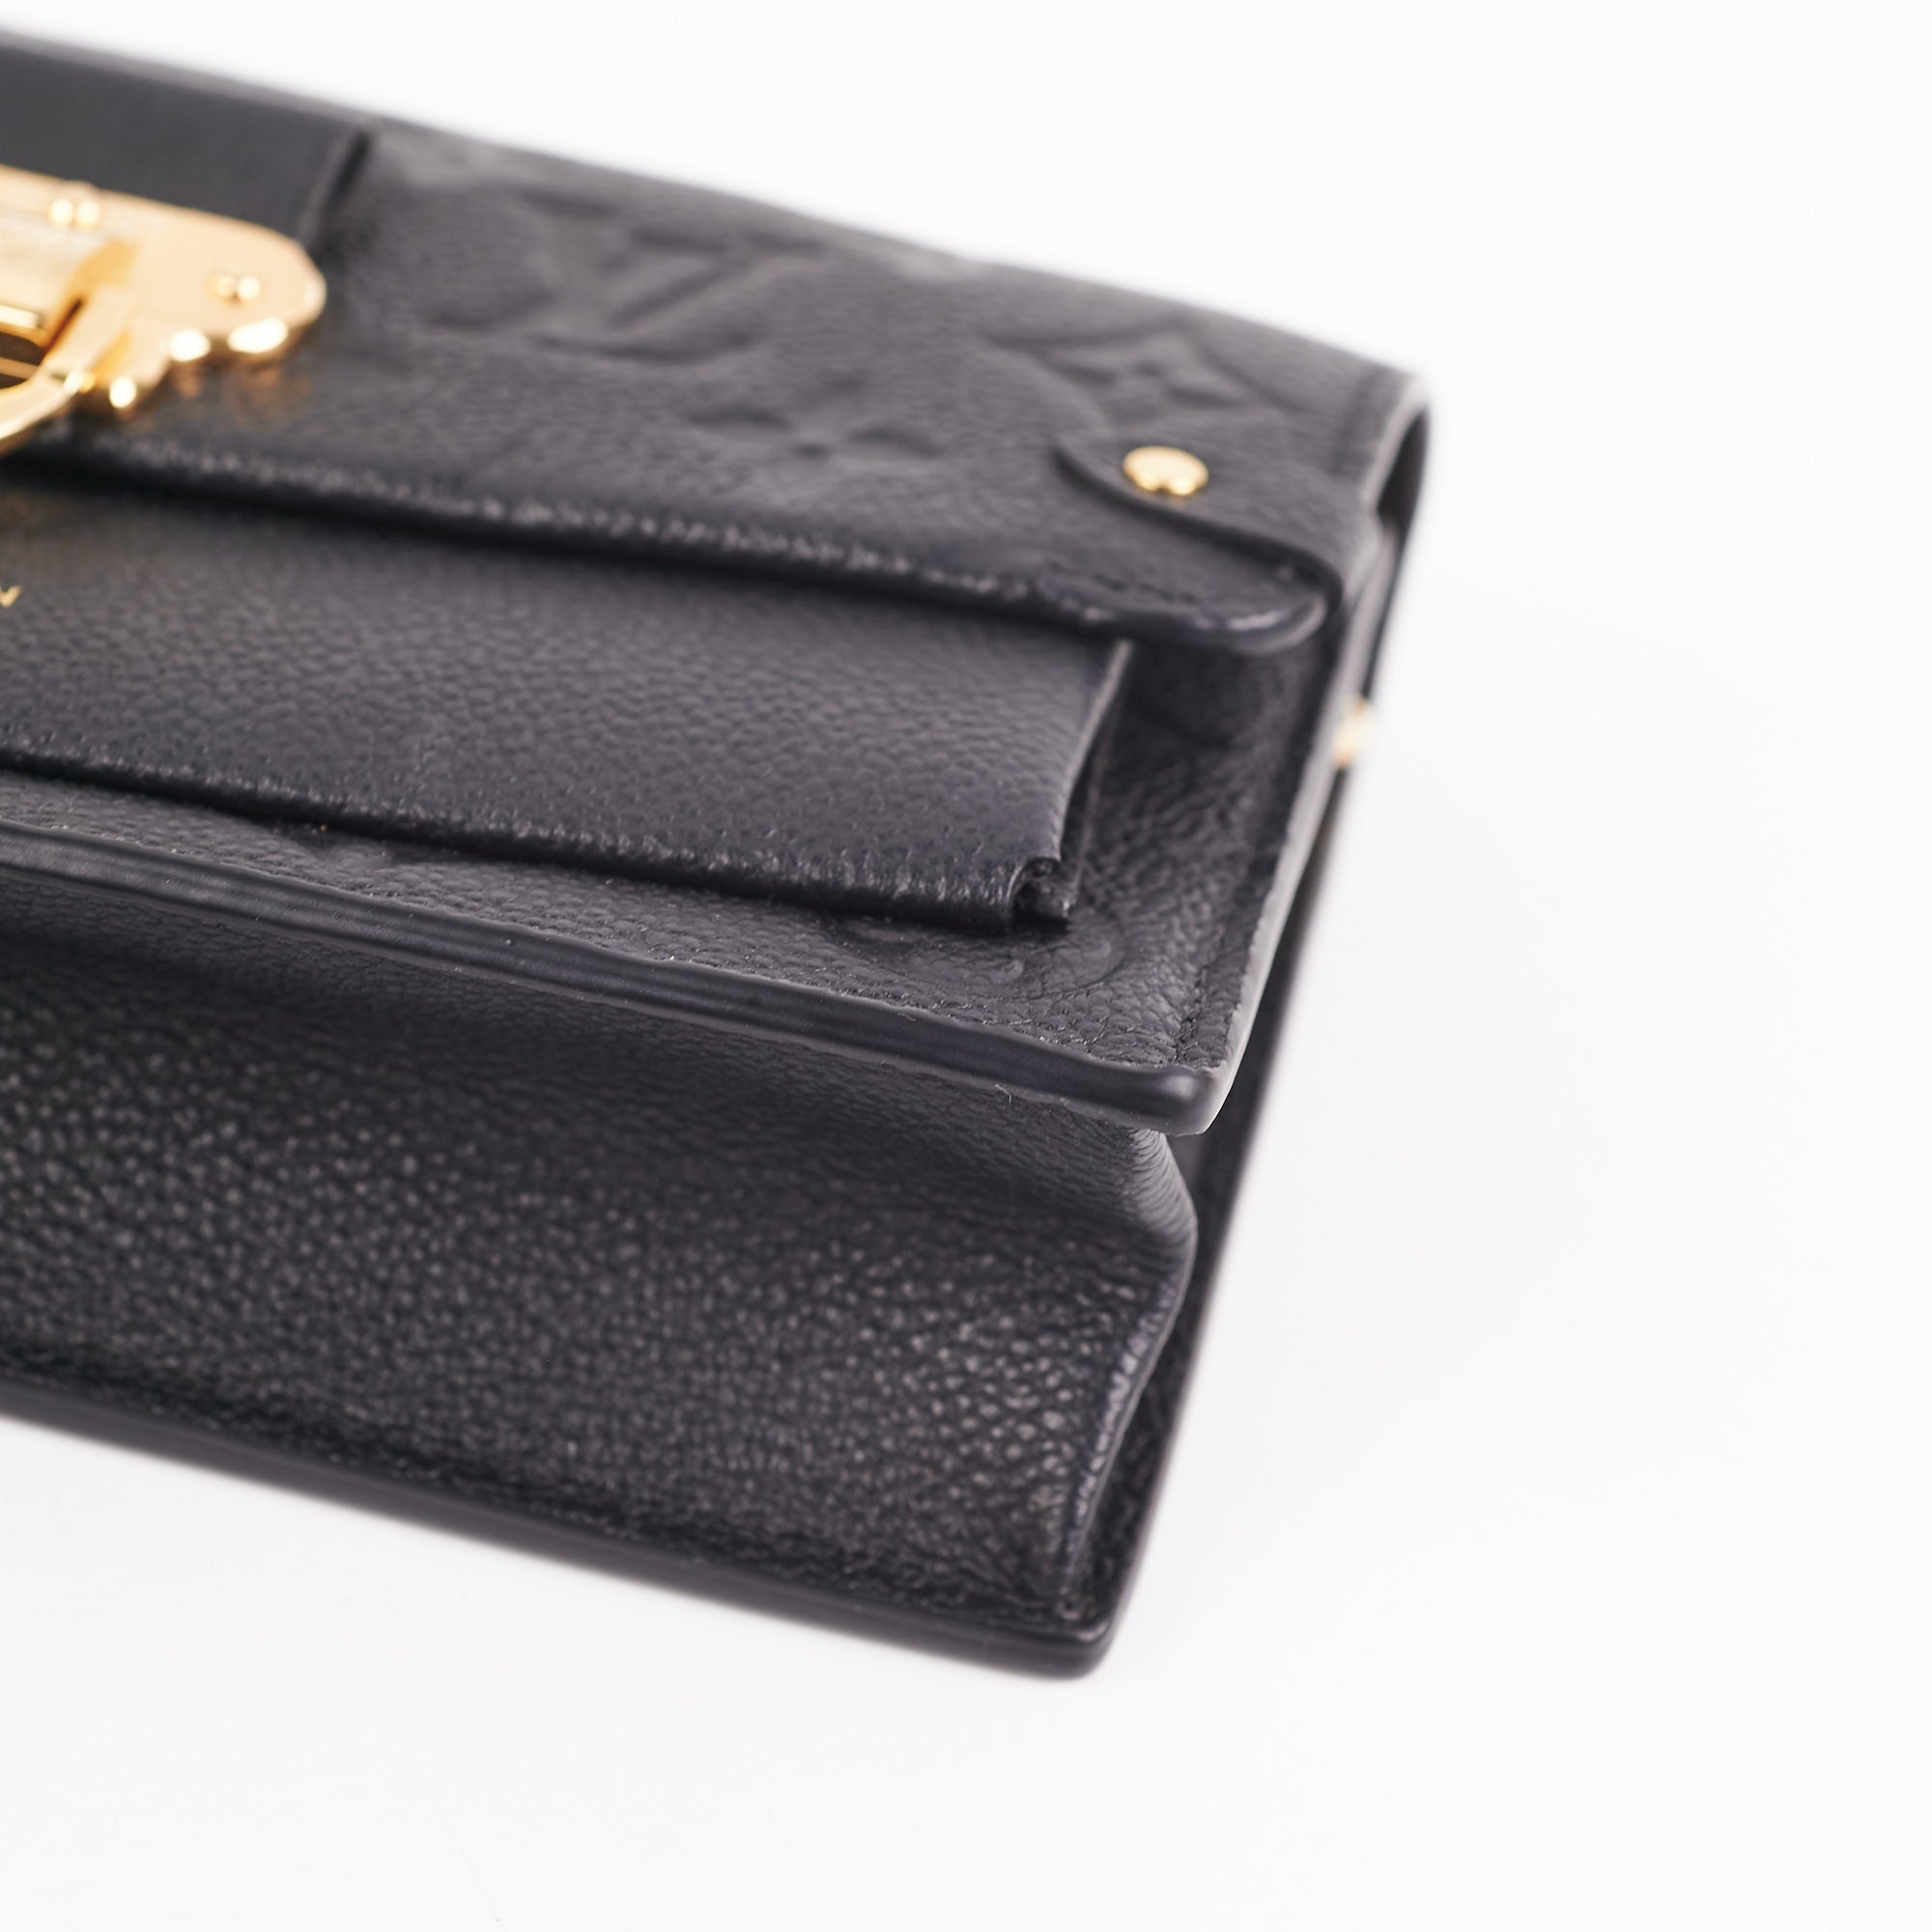 Louis Vuitton Vavin Chain Wallet Bags 4 1 for Sale in Bakersfield